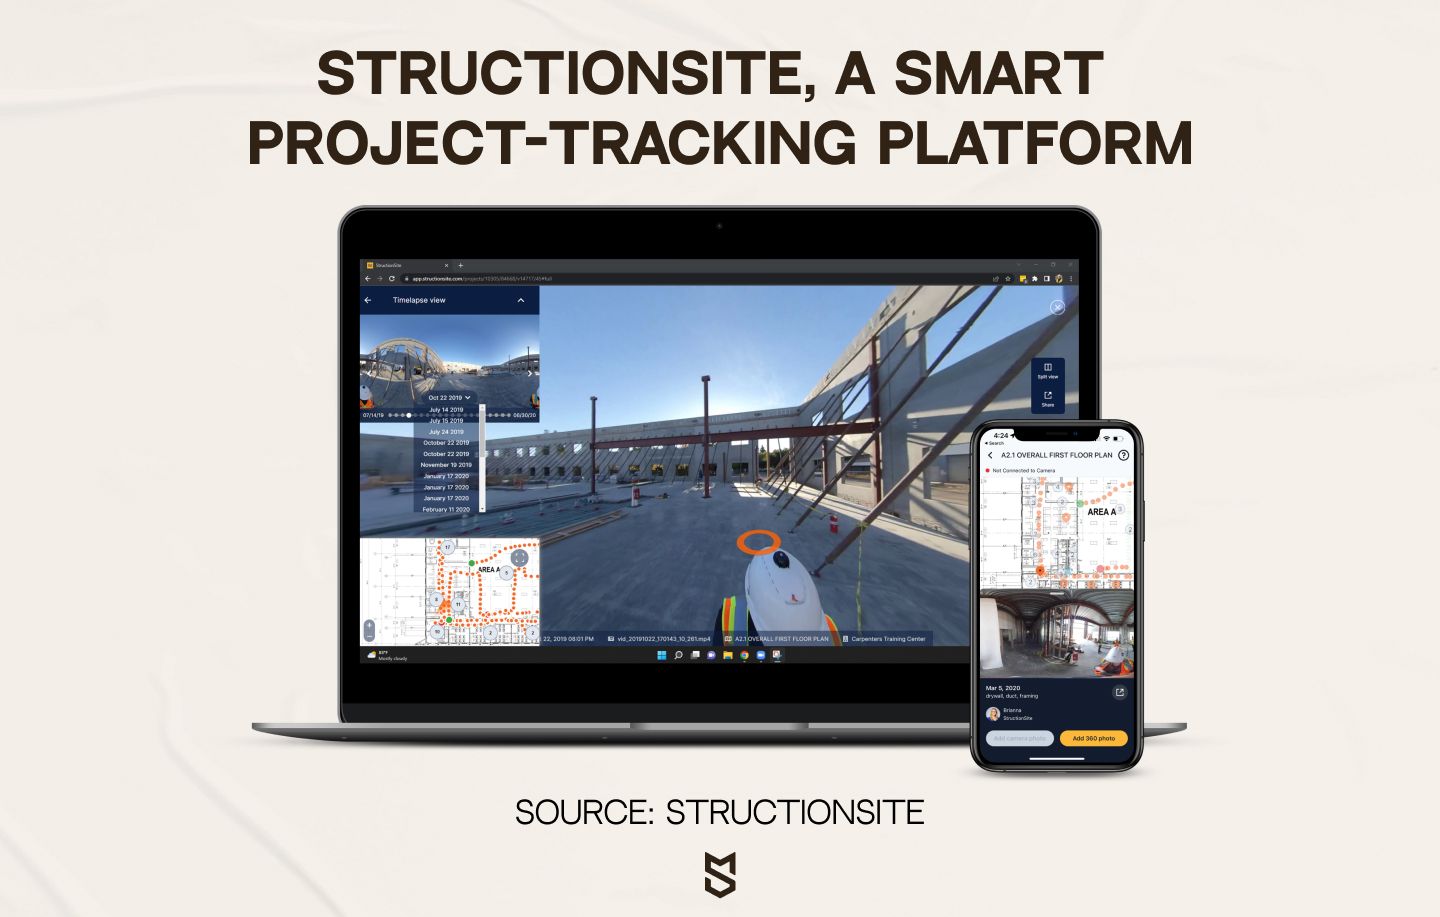 StructionSite, a smart project-tracking platform